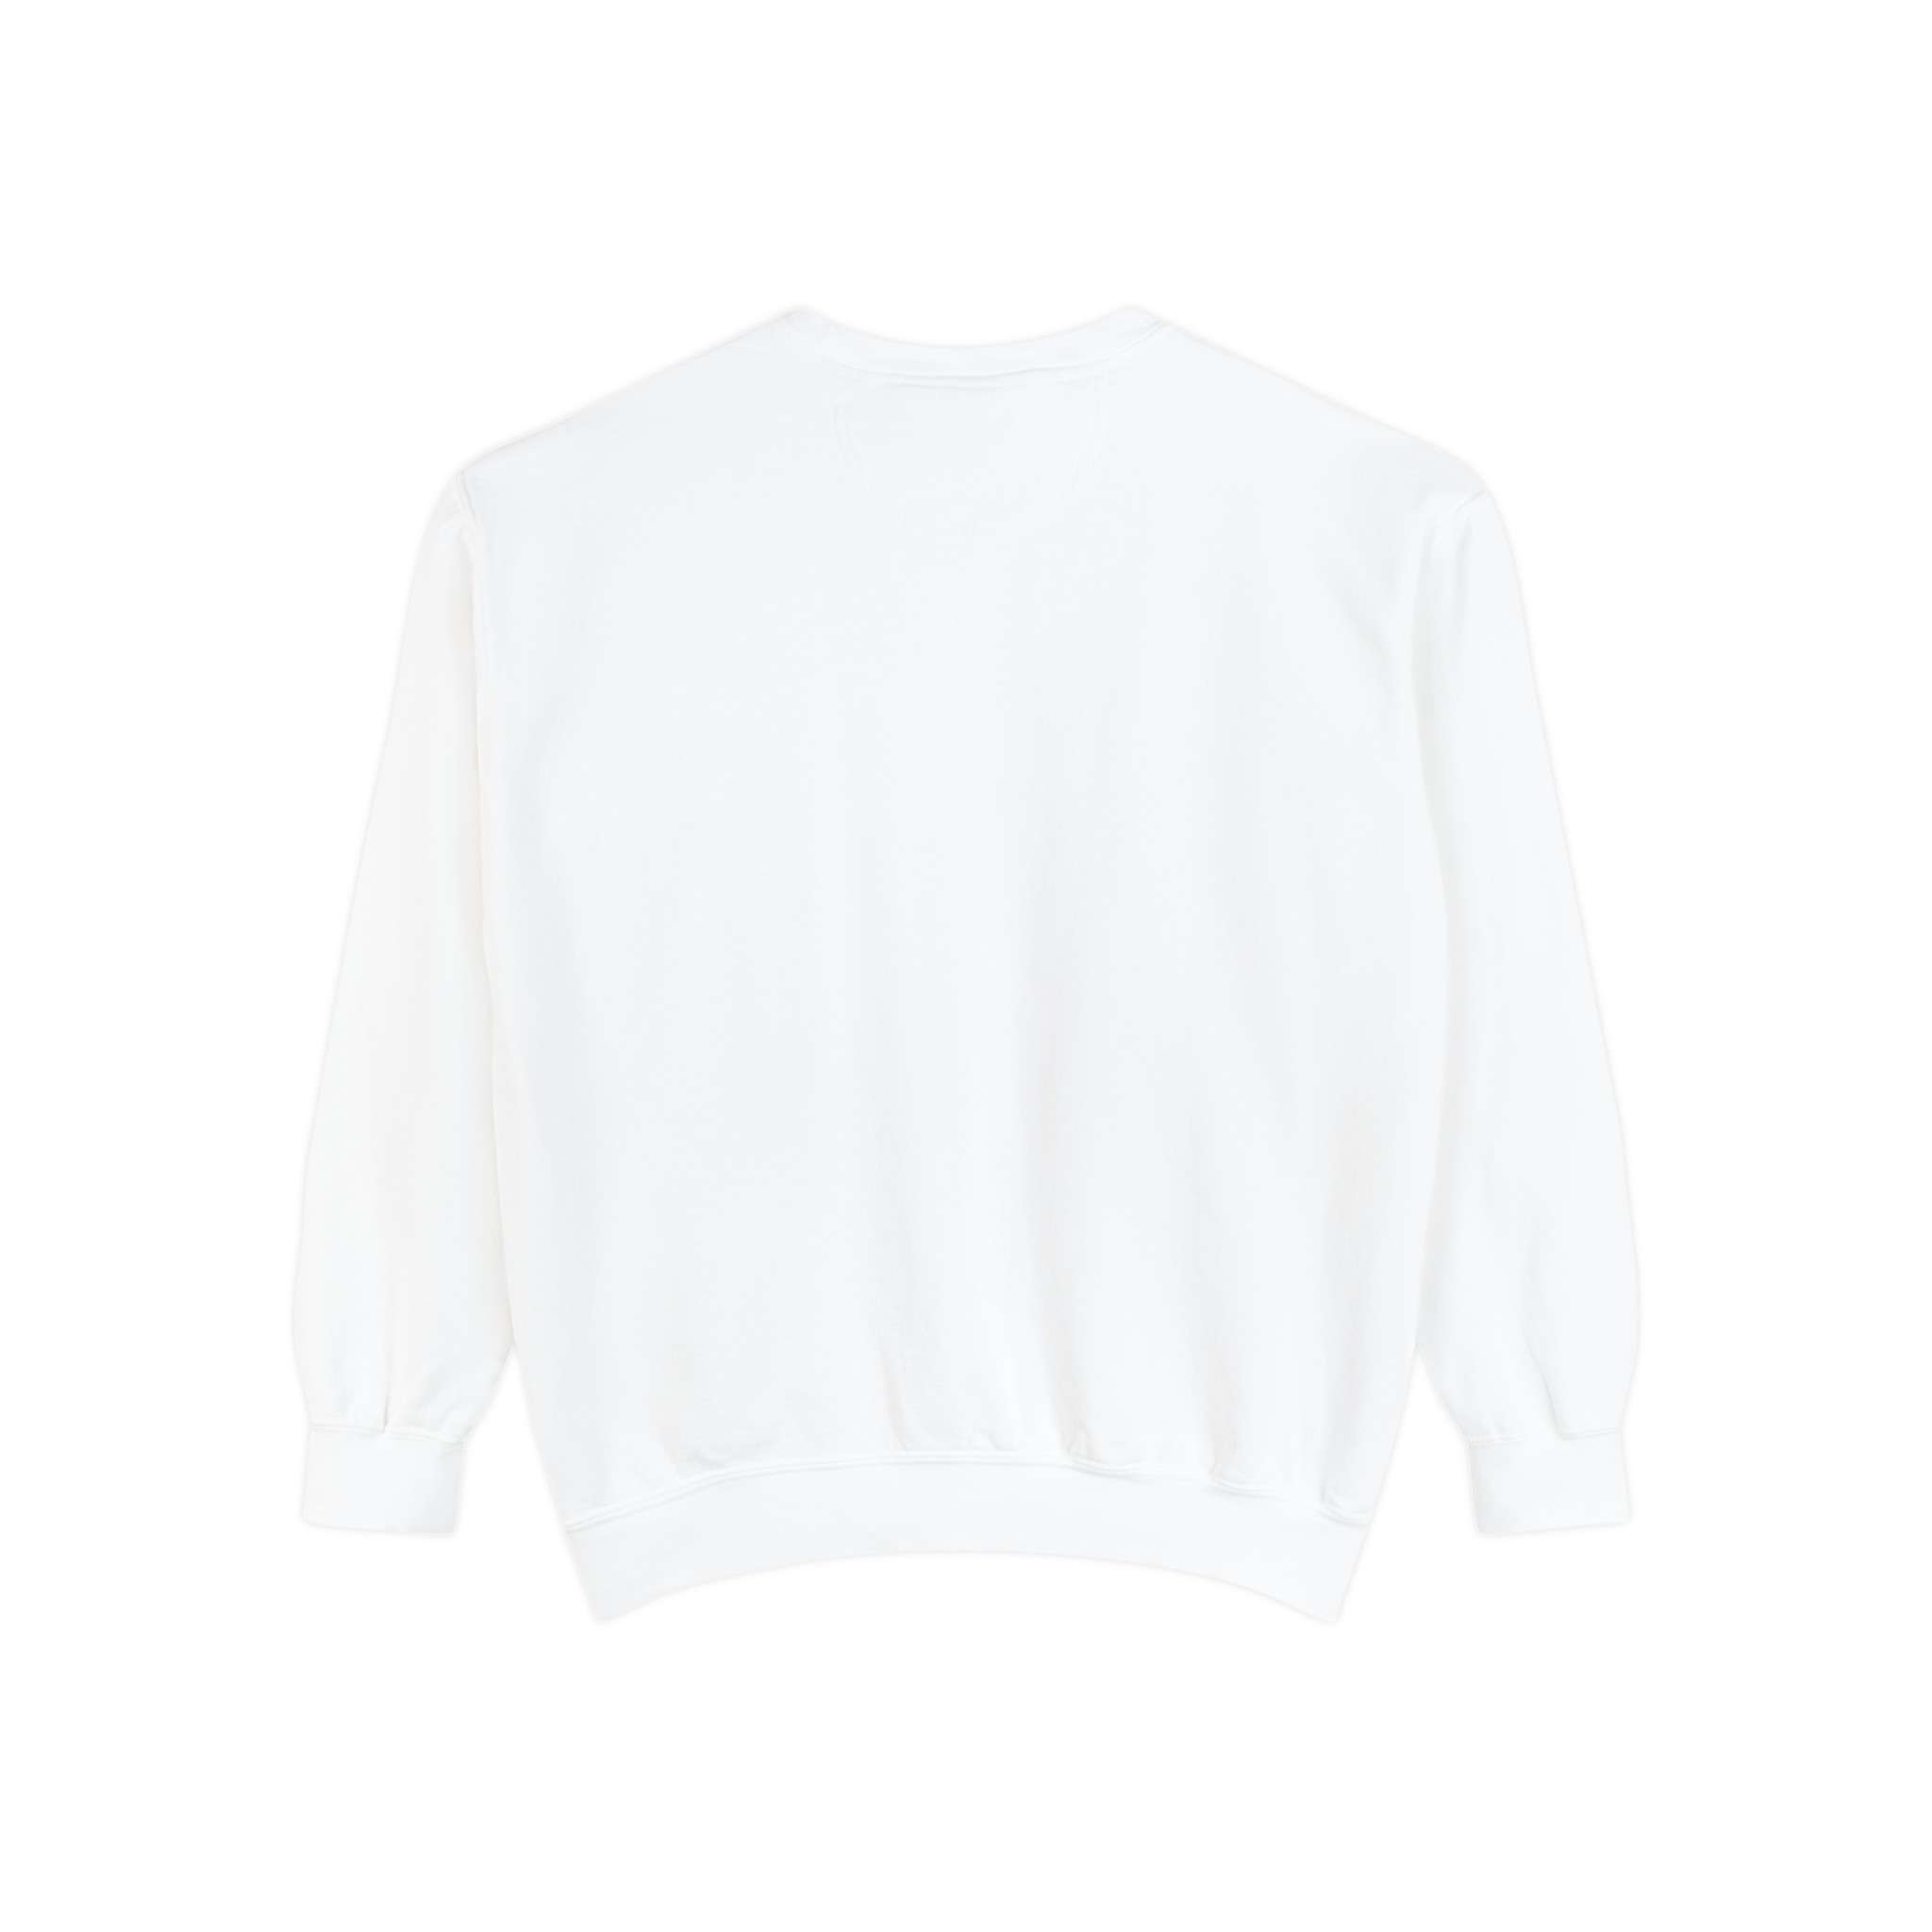 Makima Character Inspired Unisex Garment-Dyed Sweatshirt